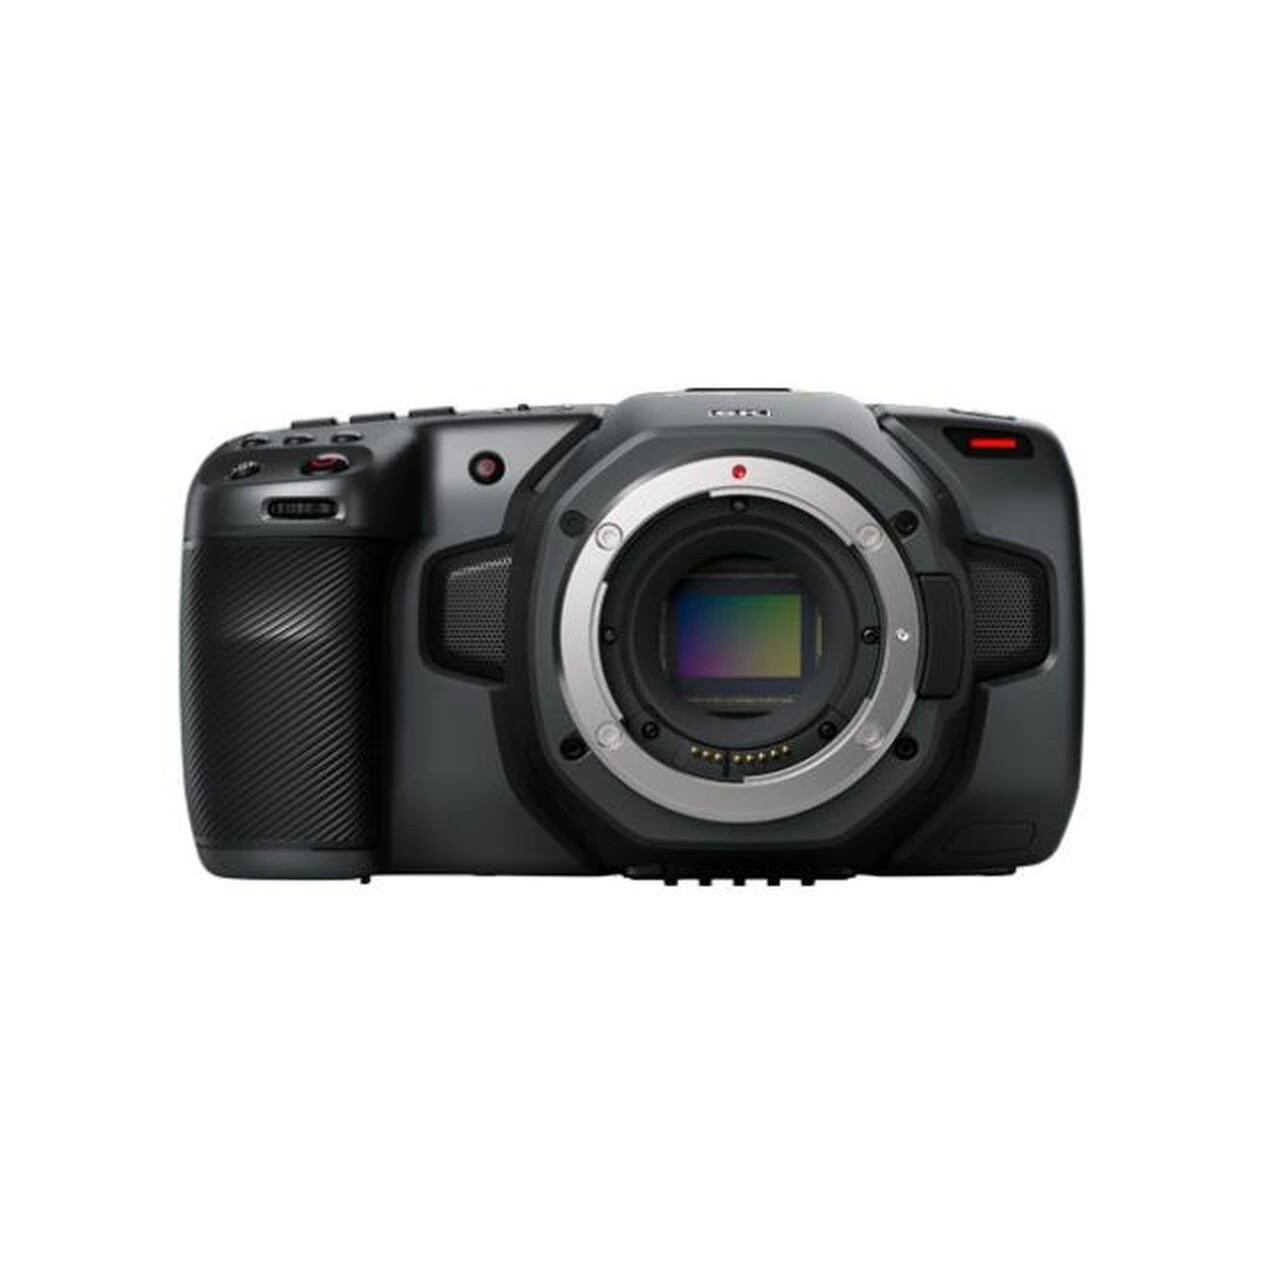 Introducing the BMPCC 6K Pro - Blackmagic's Advanced Compact Cine Camera